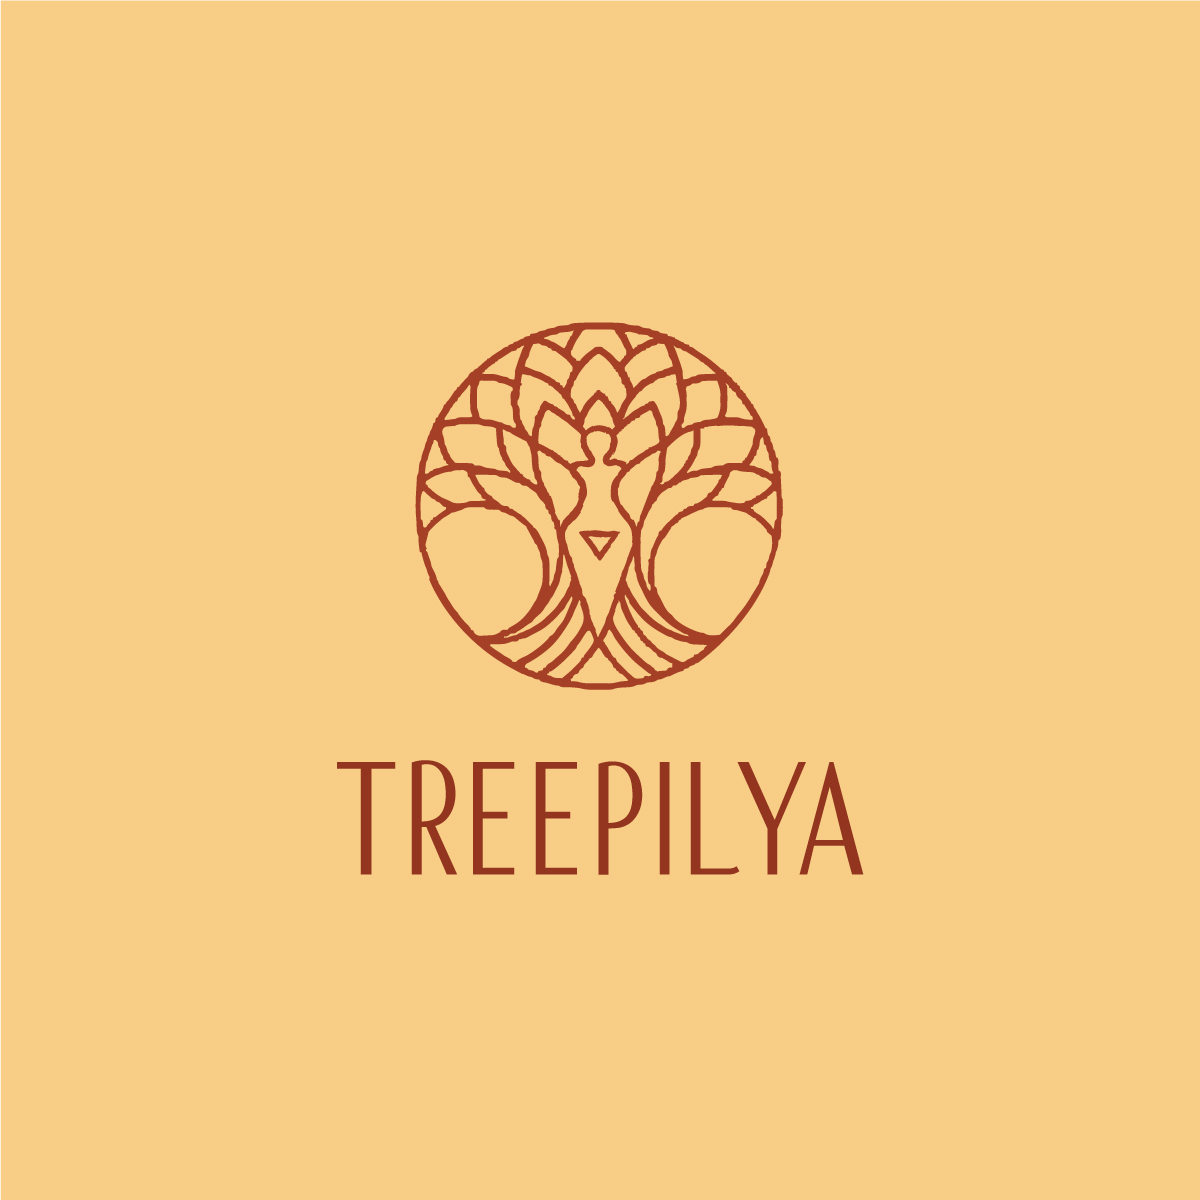 Reforestation initiative planting trees, tackling climatechange and devastated woods: Treepilya